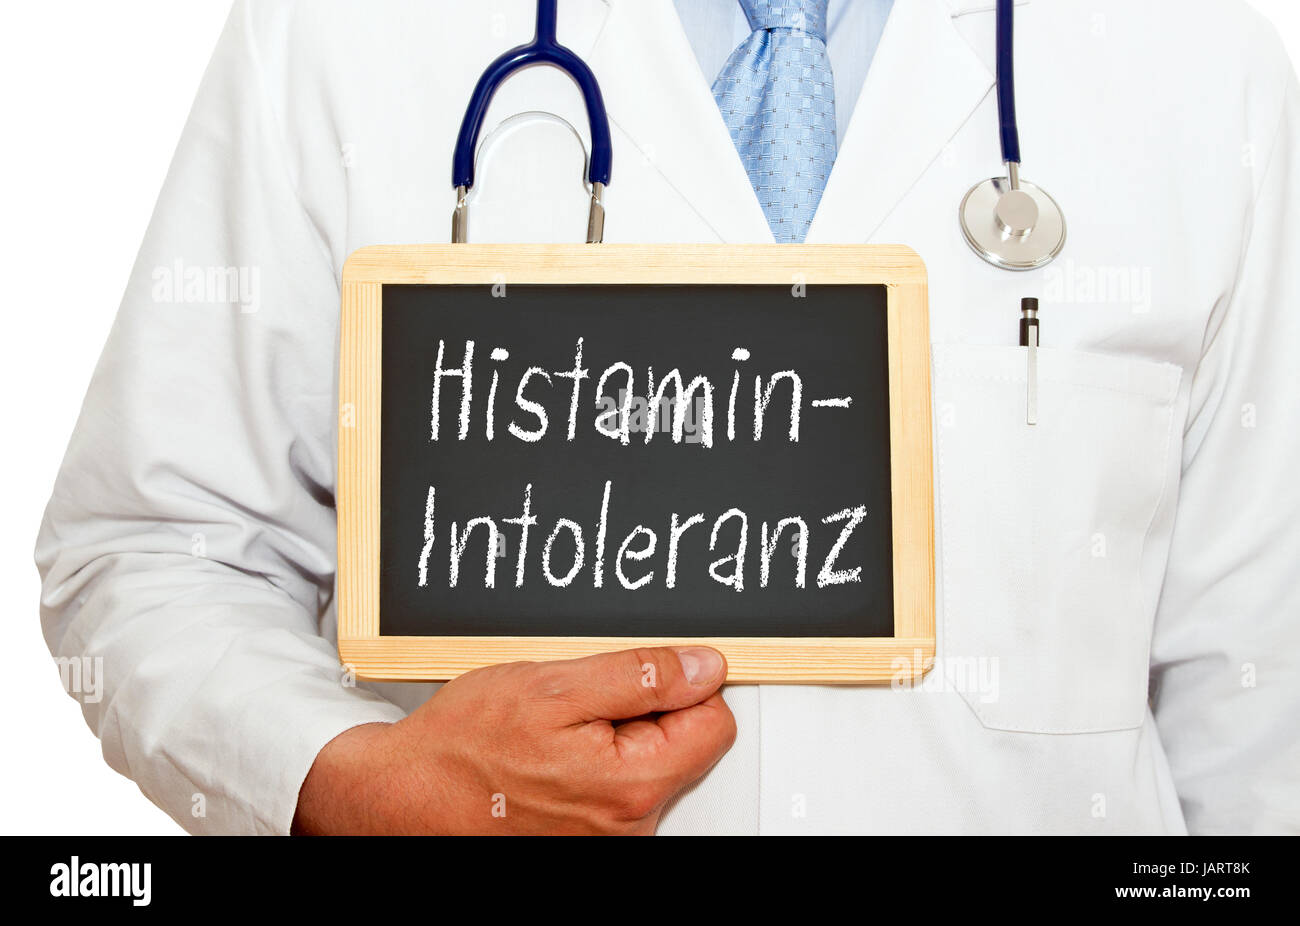 Histamin Intoleranz Stock Photo